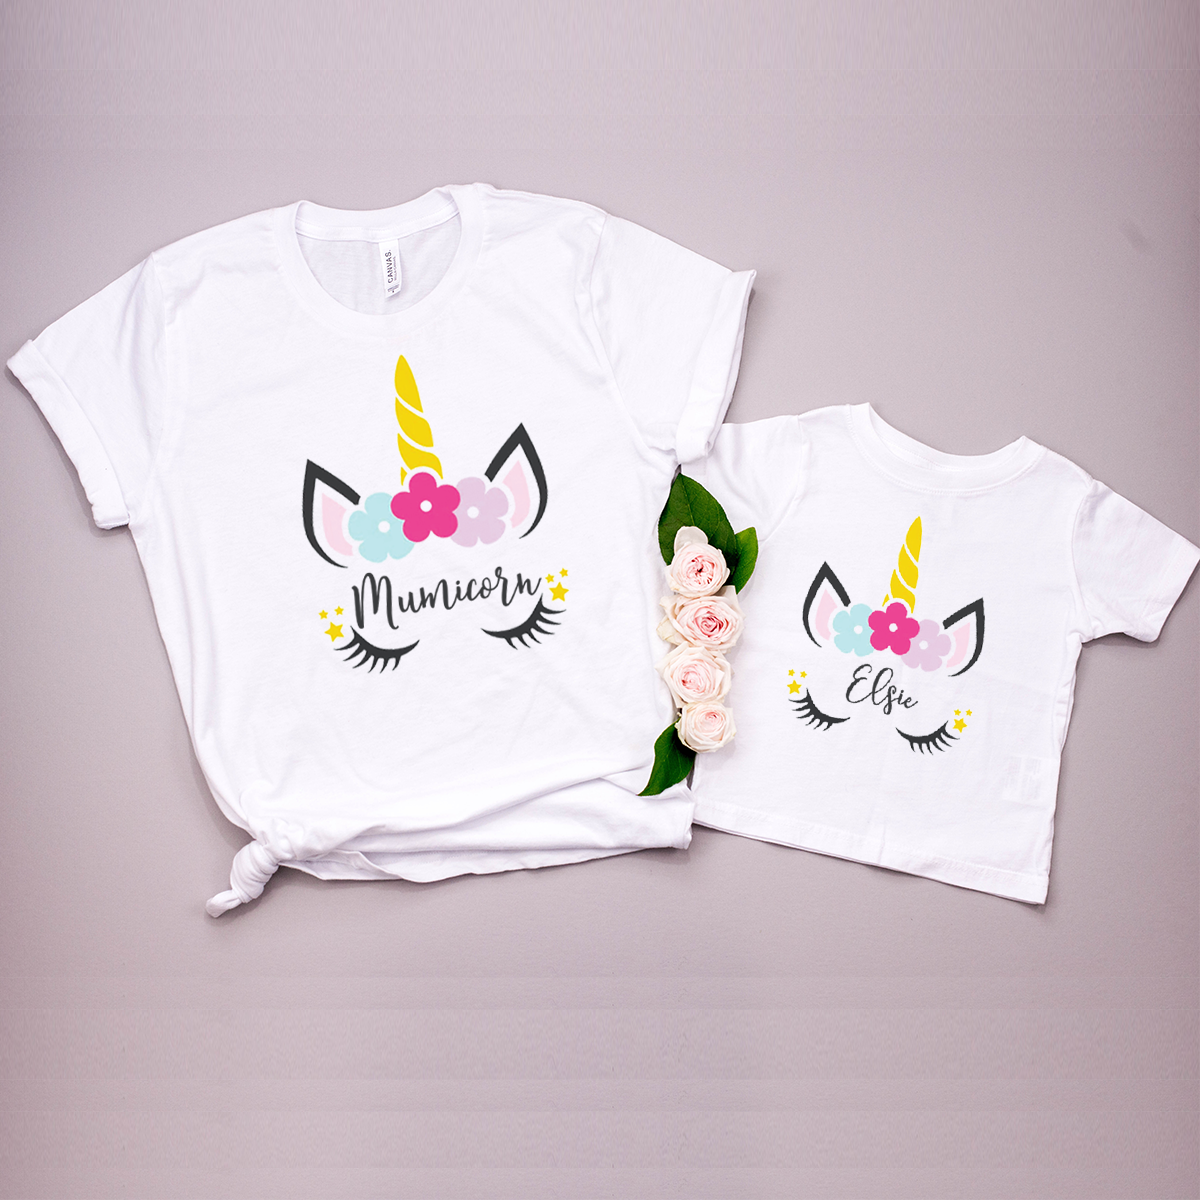 Mumicorn Unicorn white t-shirt - Personalised options!